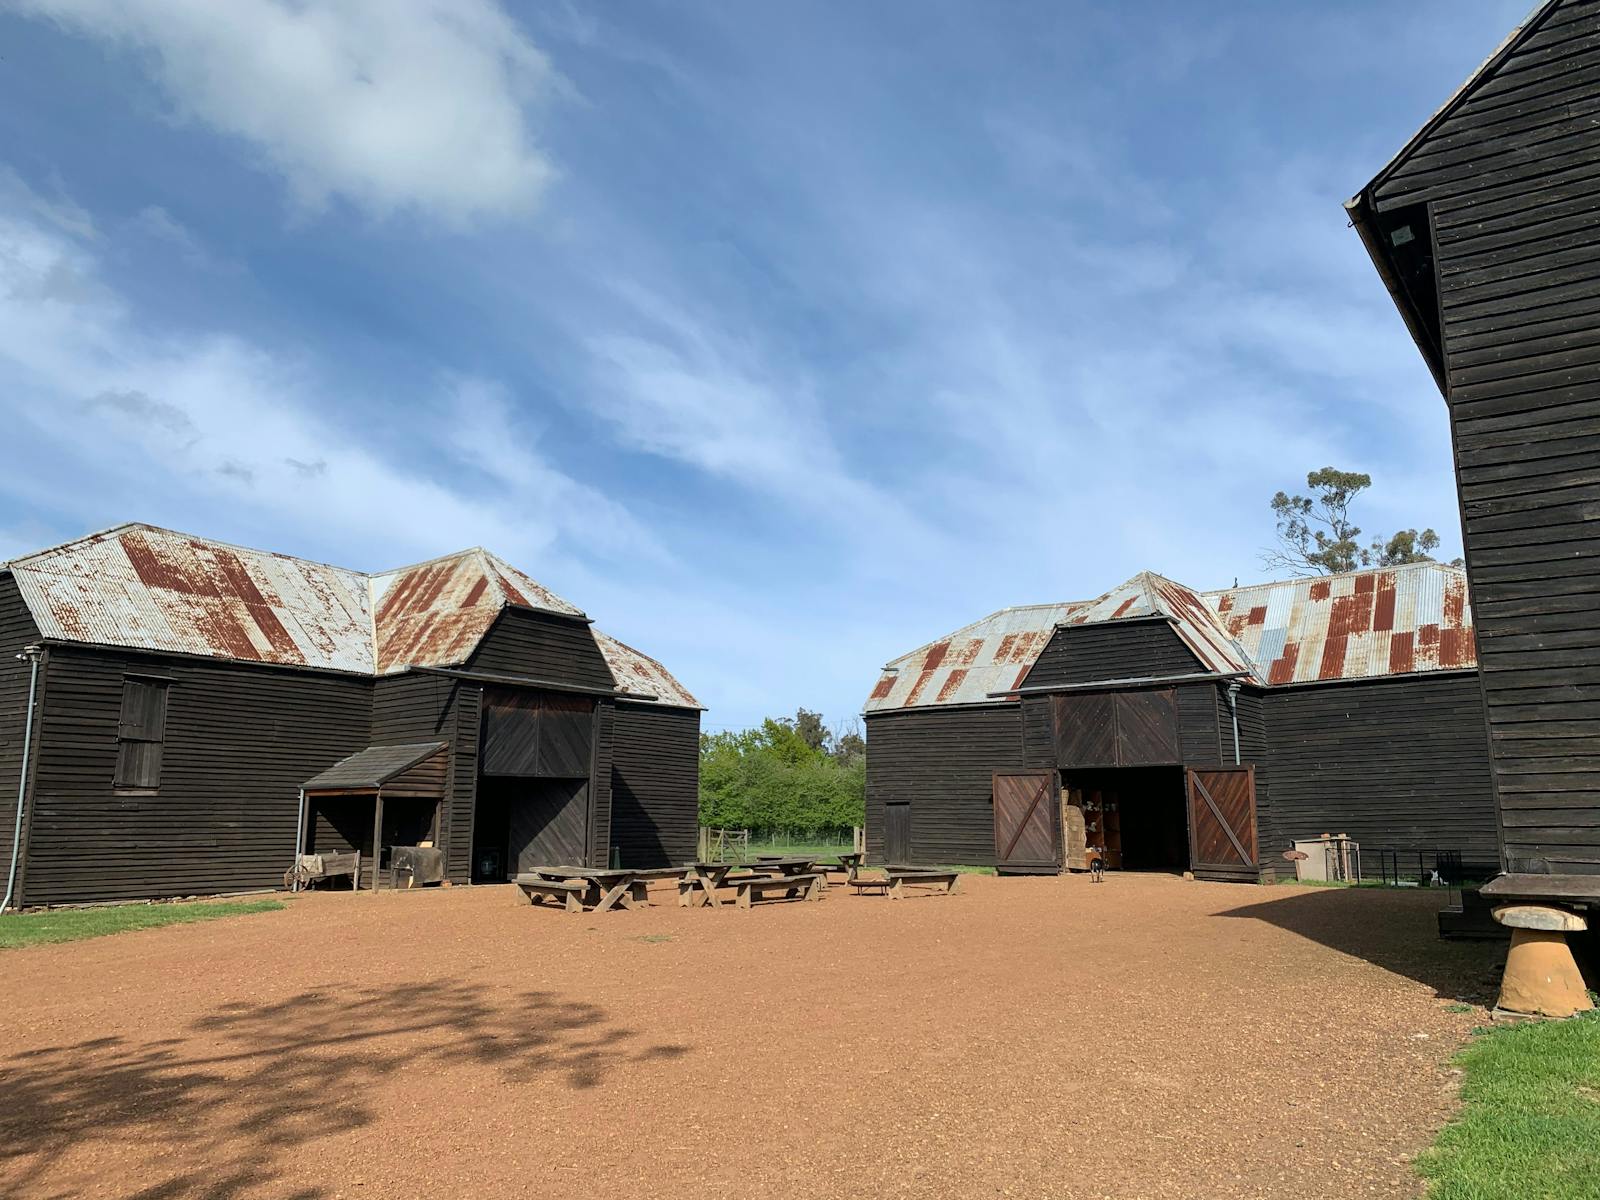 Three large barns surrounding quadrangle of farm village